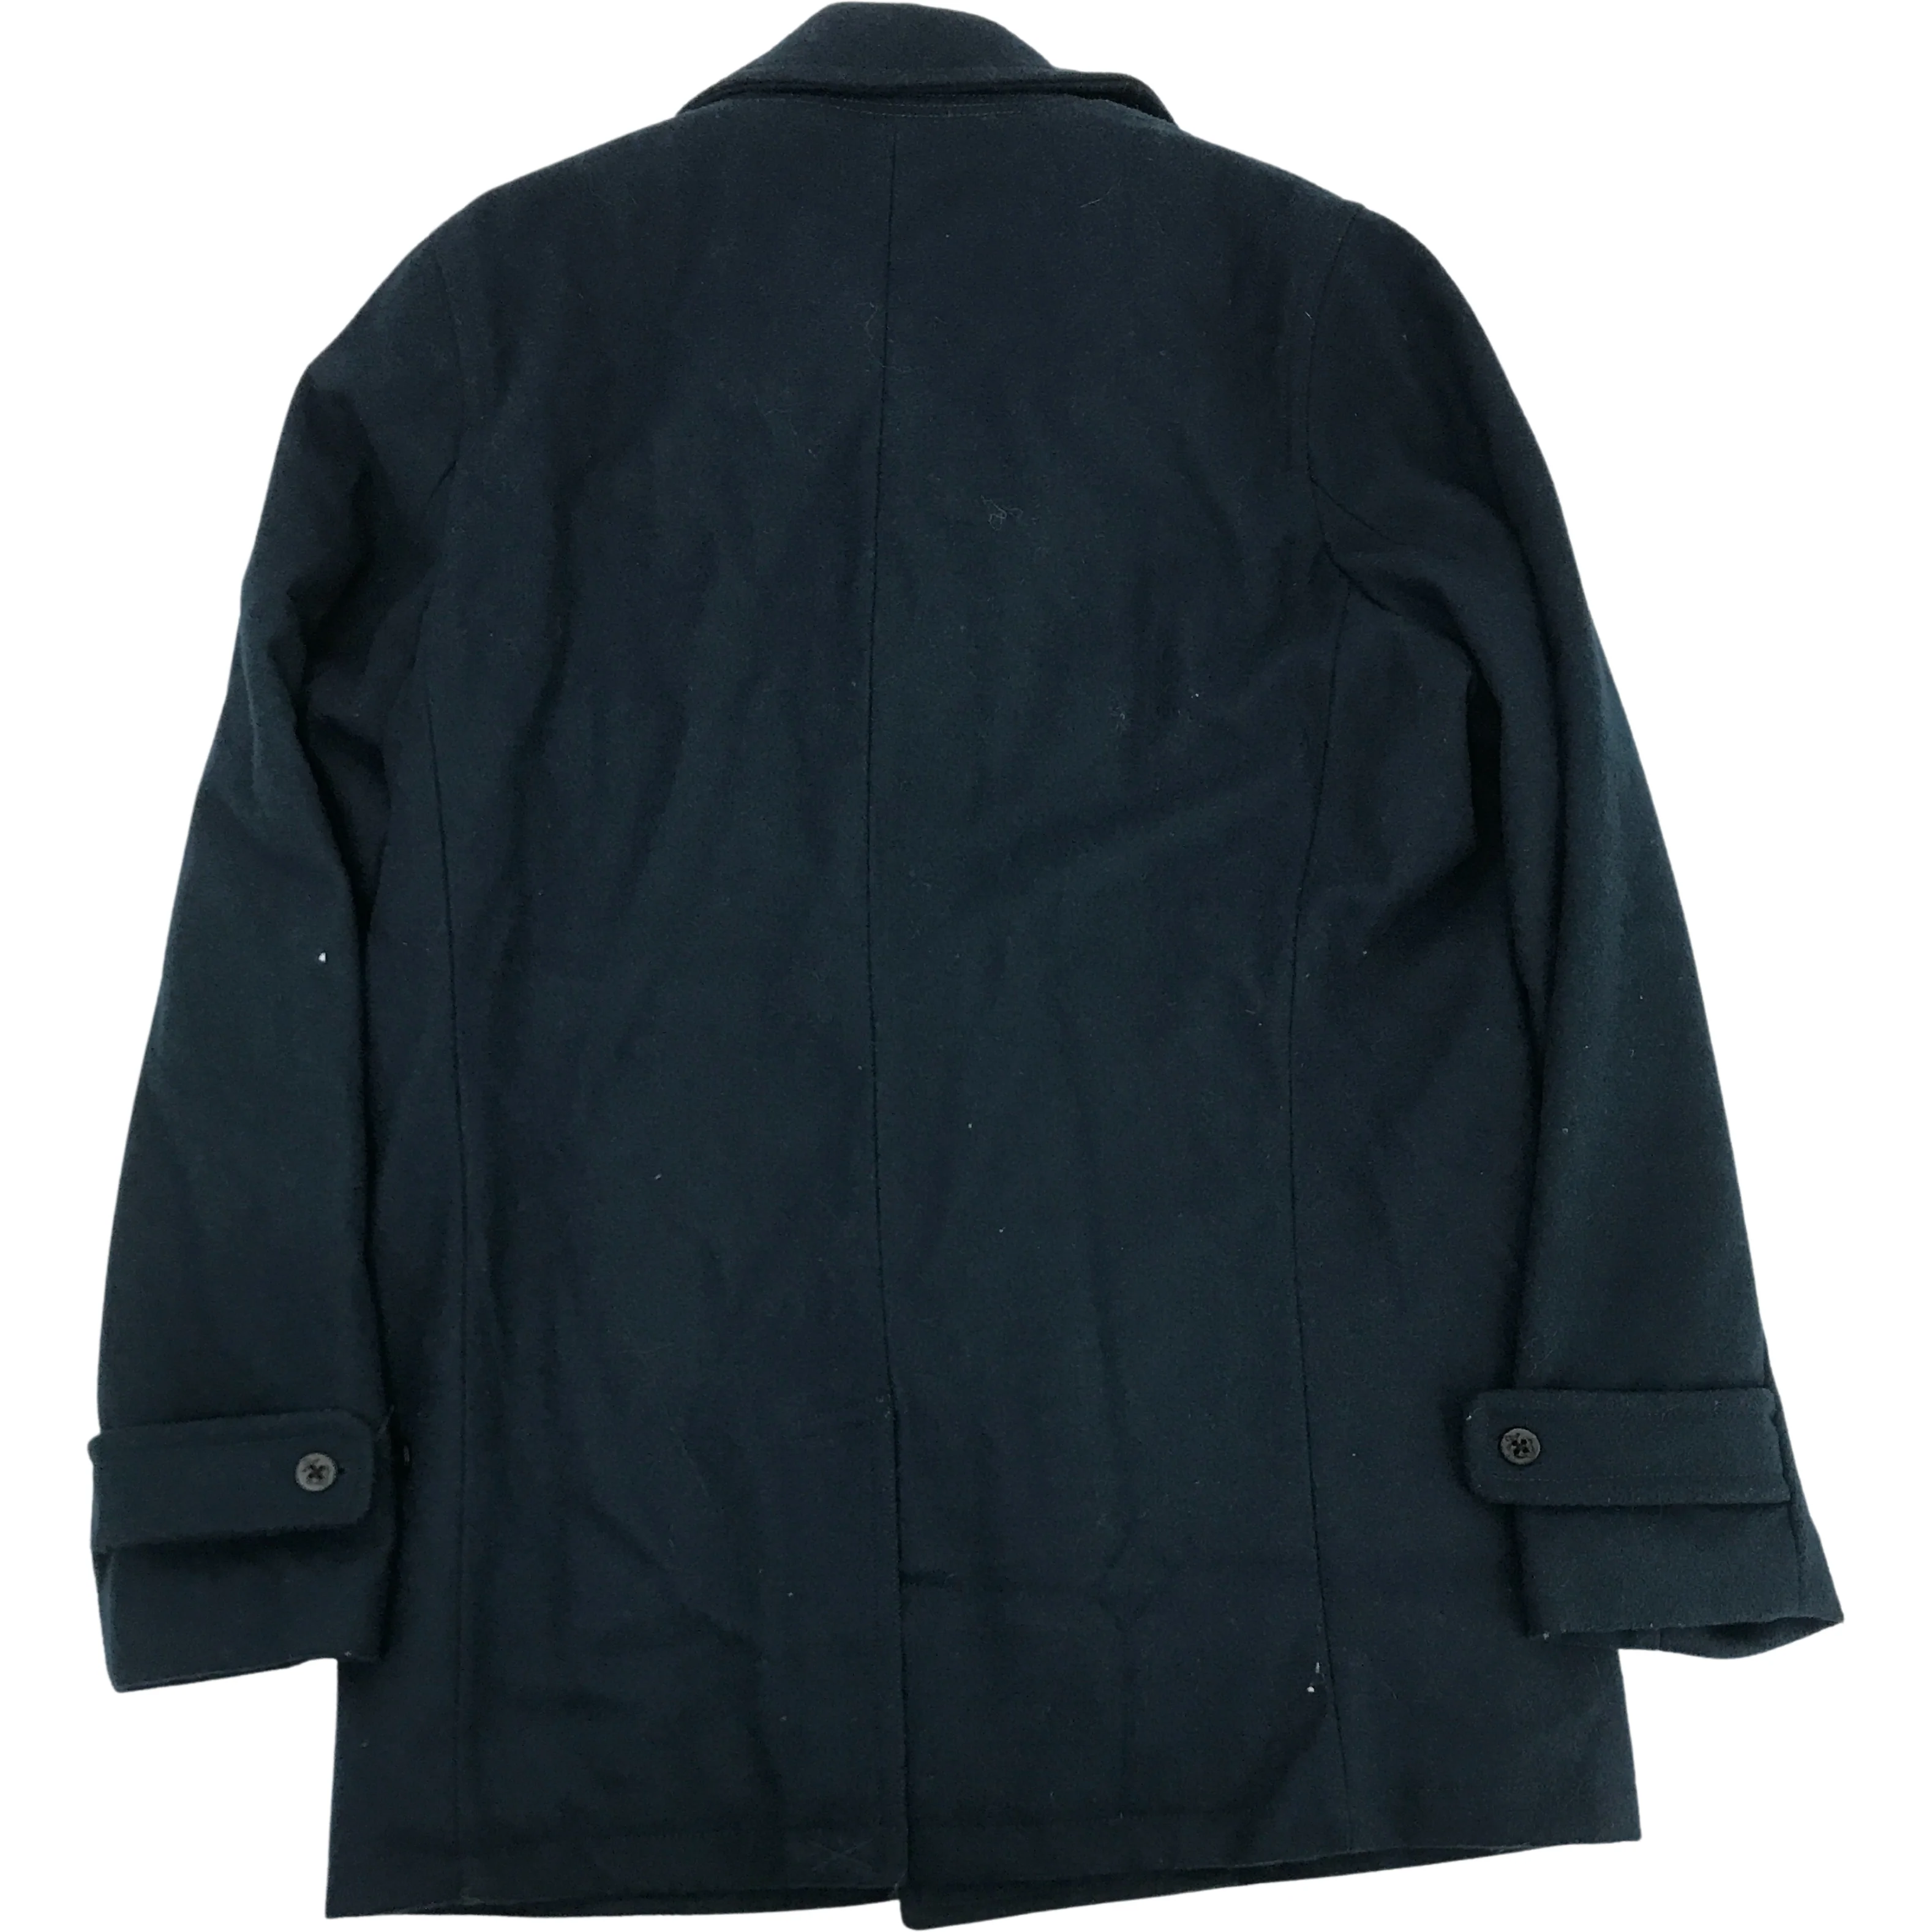 Lands End Men's Winter Coat / Men's Jacket / Peacoat / Blue / Large